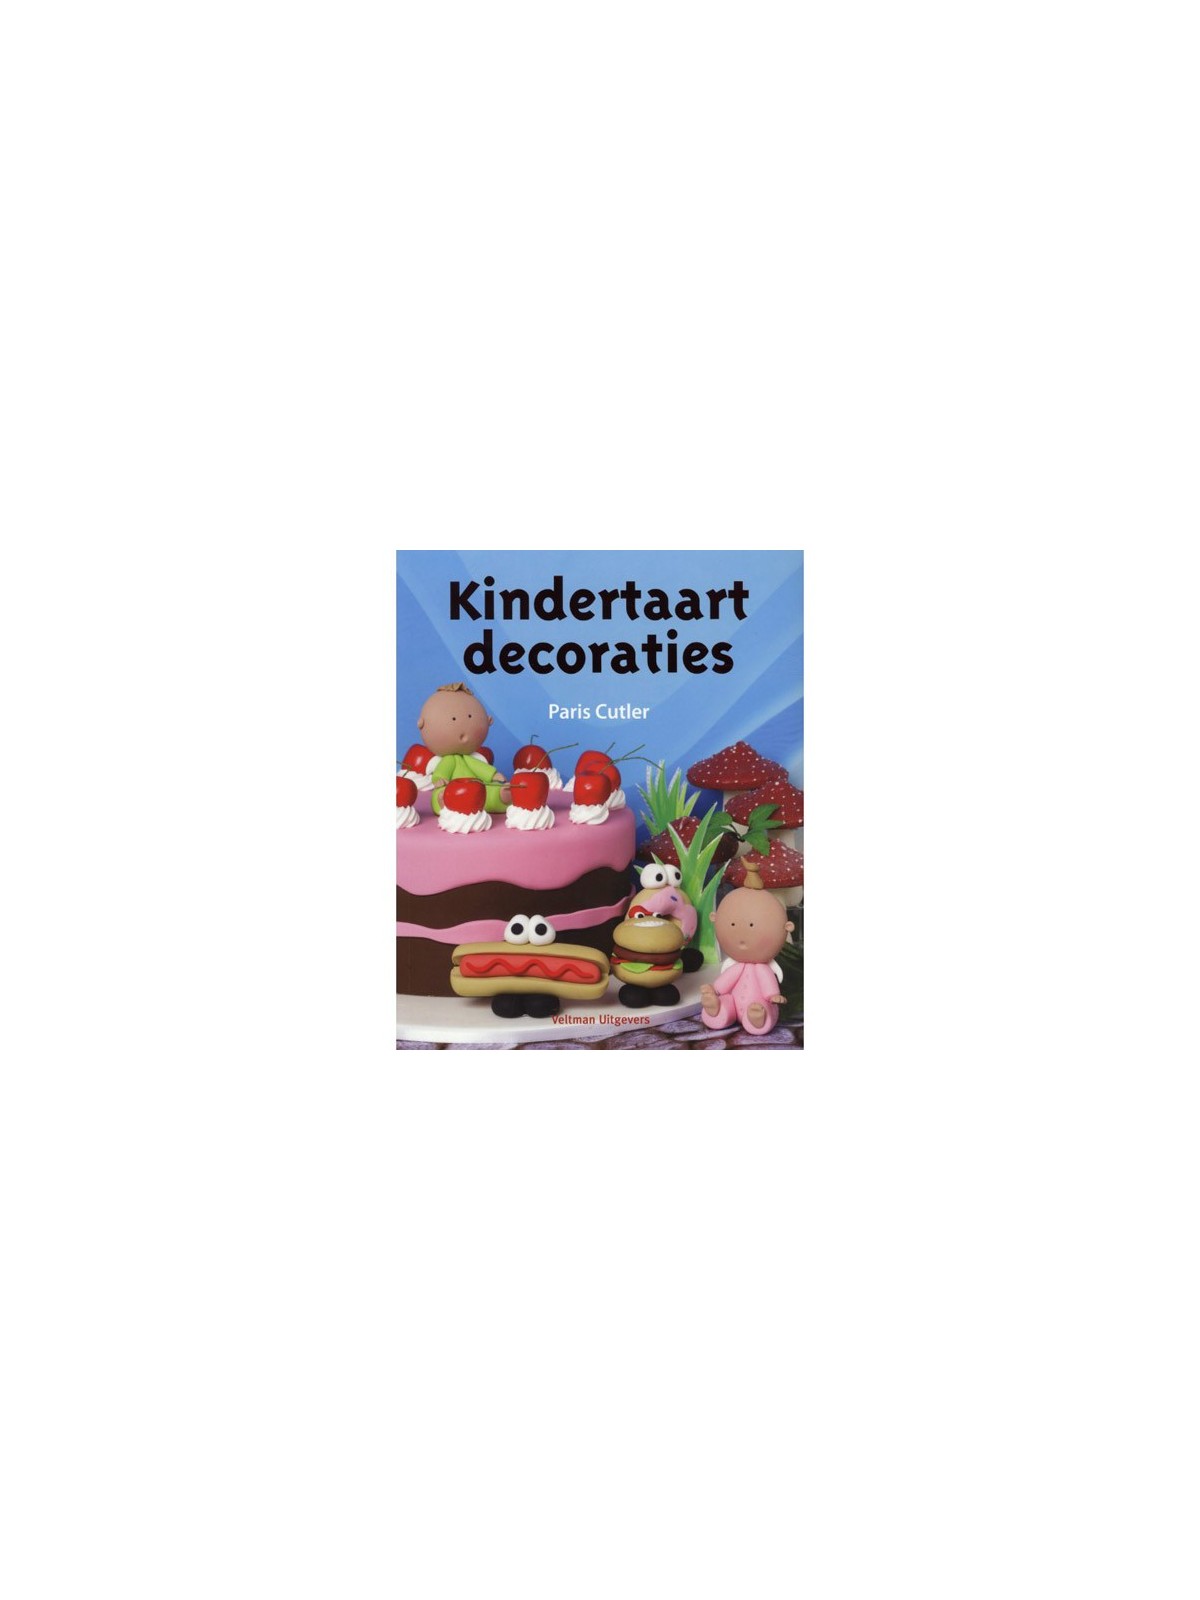 Kindertaart decoraties - Paris Cutler - dětské dekorace na dort